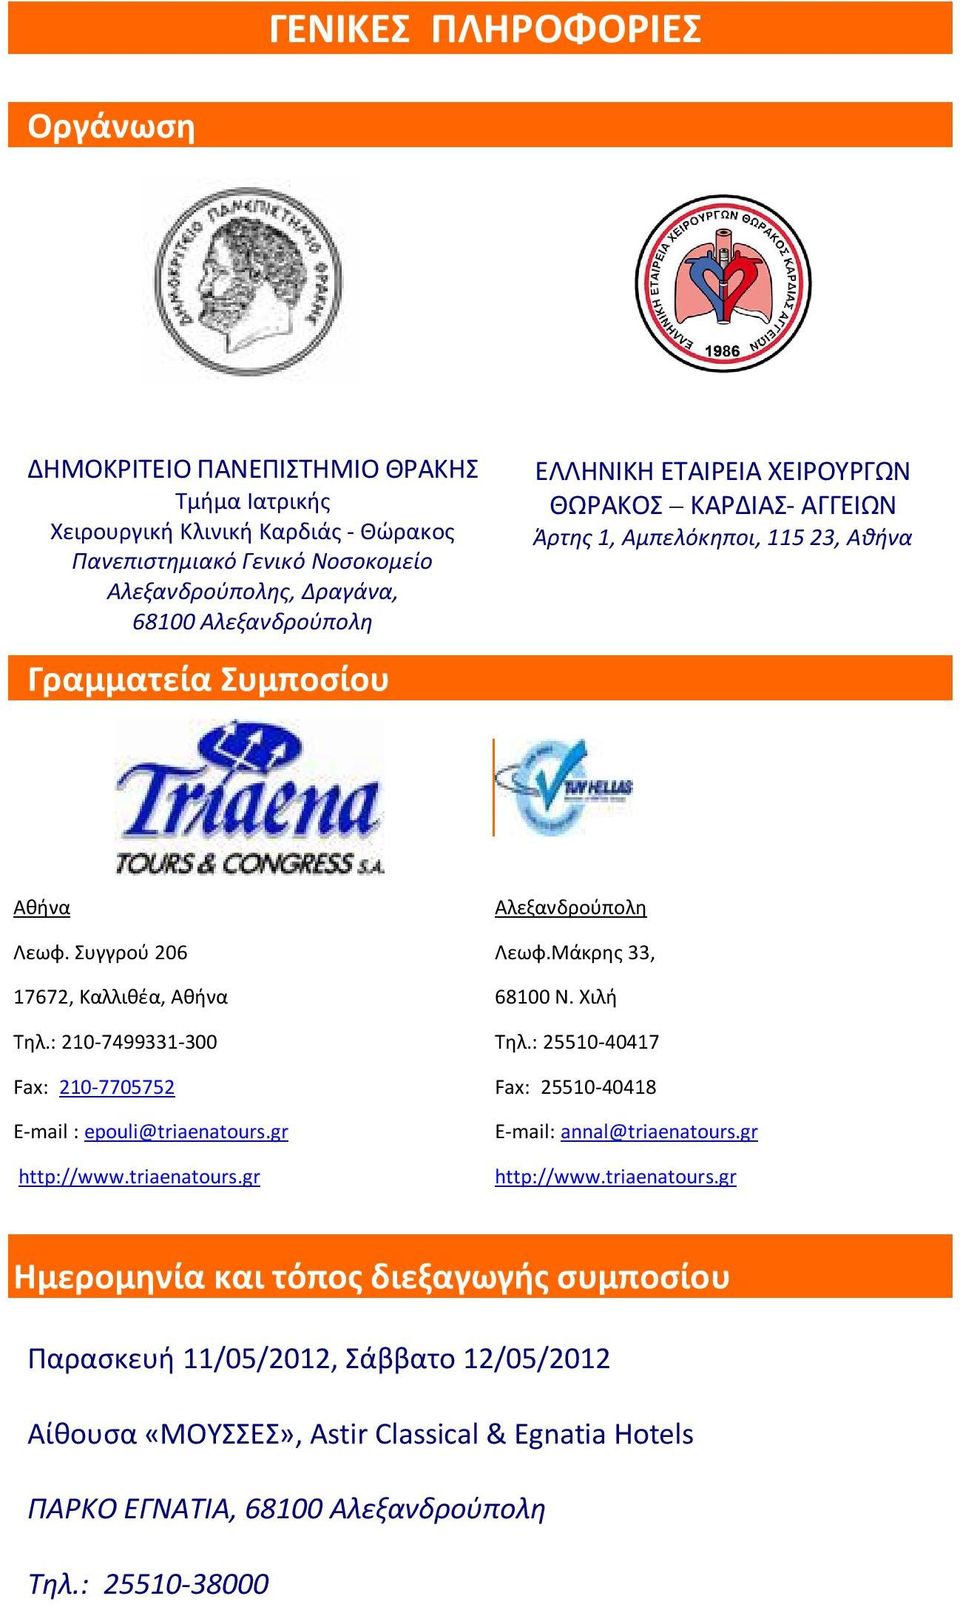 : 210-7499331-300 Fax: 210-7705752 E-mail : epouli@triaenatours.gr http://www.triaenatours.gr Αλεξανδρούπολη Λεωφ.Μάκρης 33, 68100 Ν. Χιλή Τηλ.